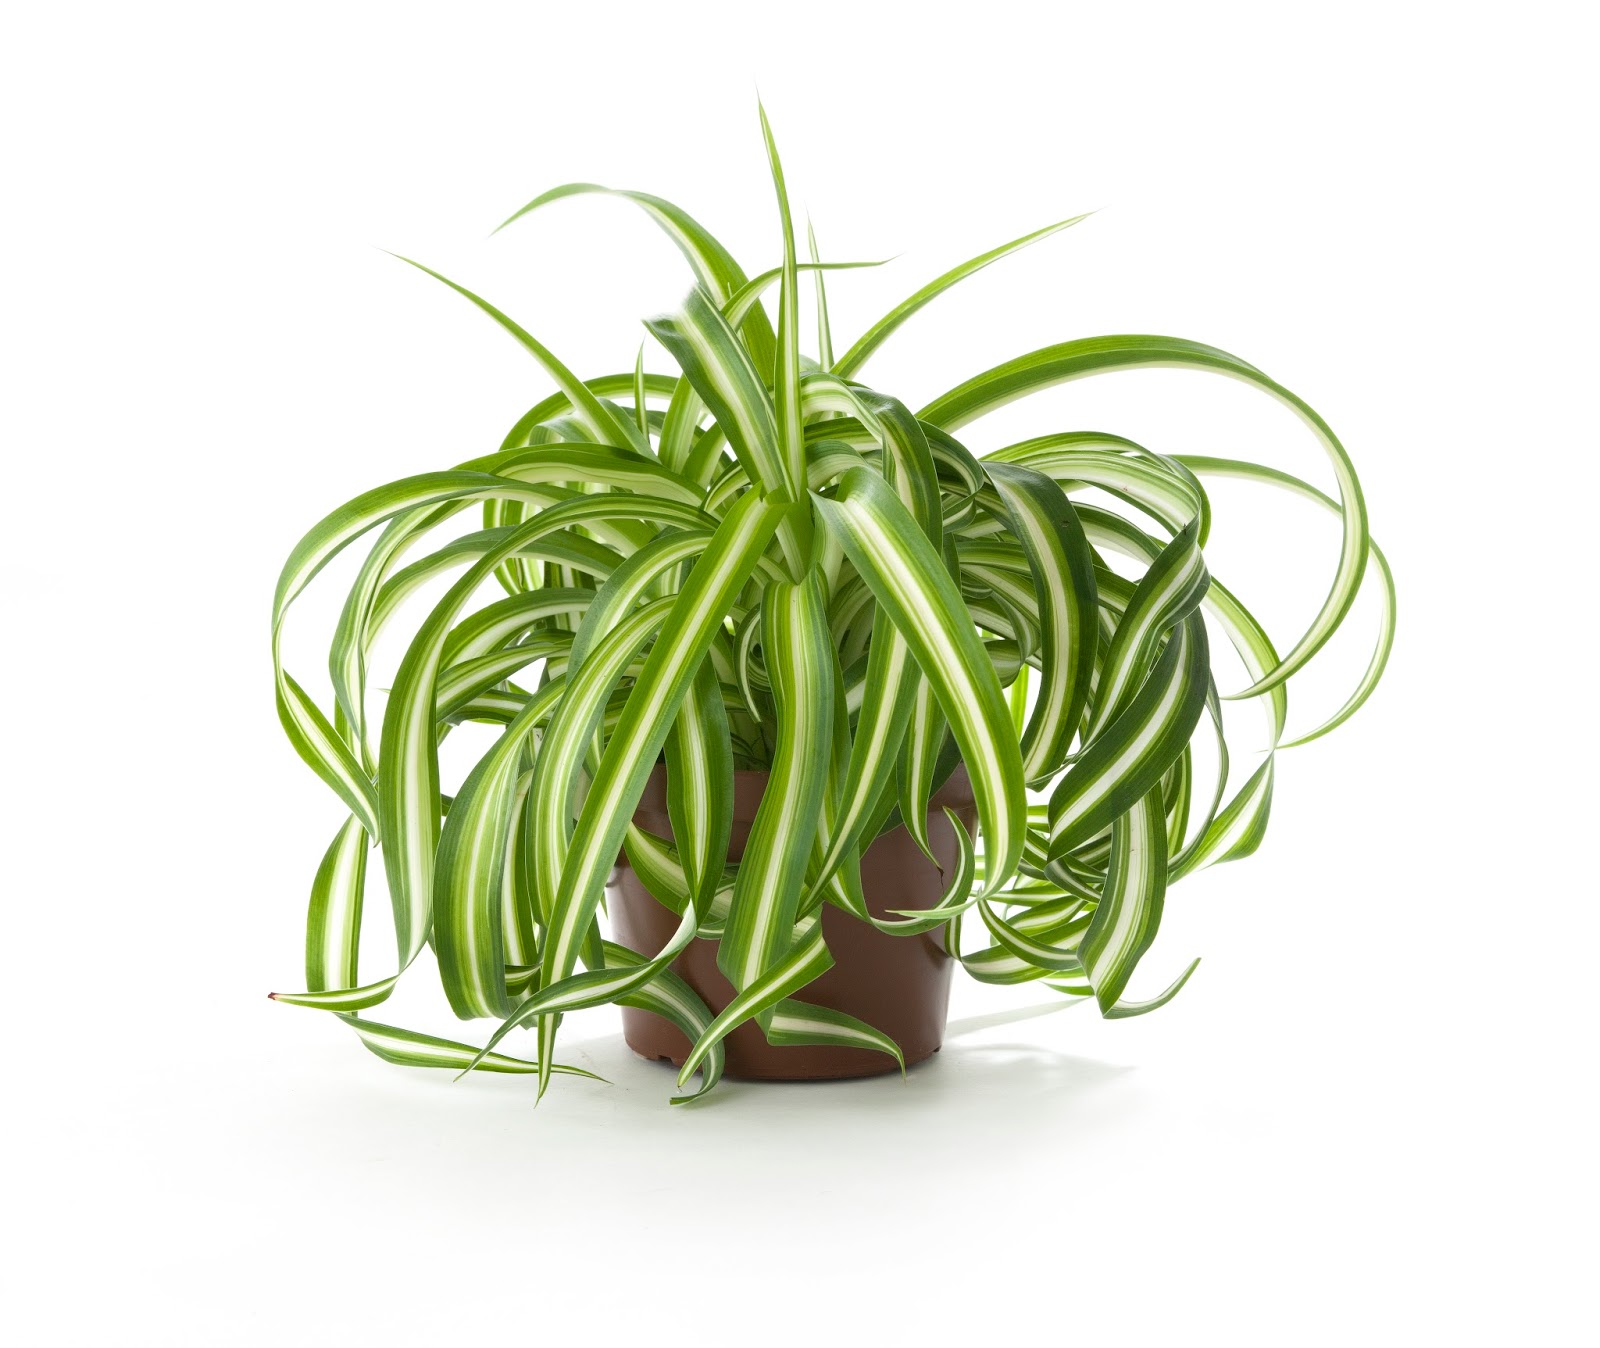 Planta araña - spider plant - chlorophytum comosum